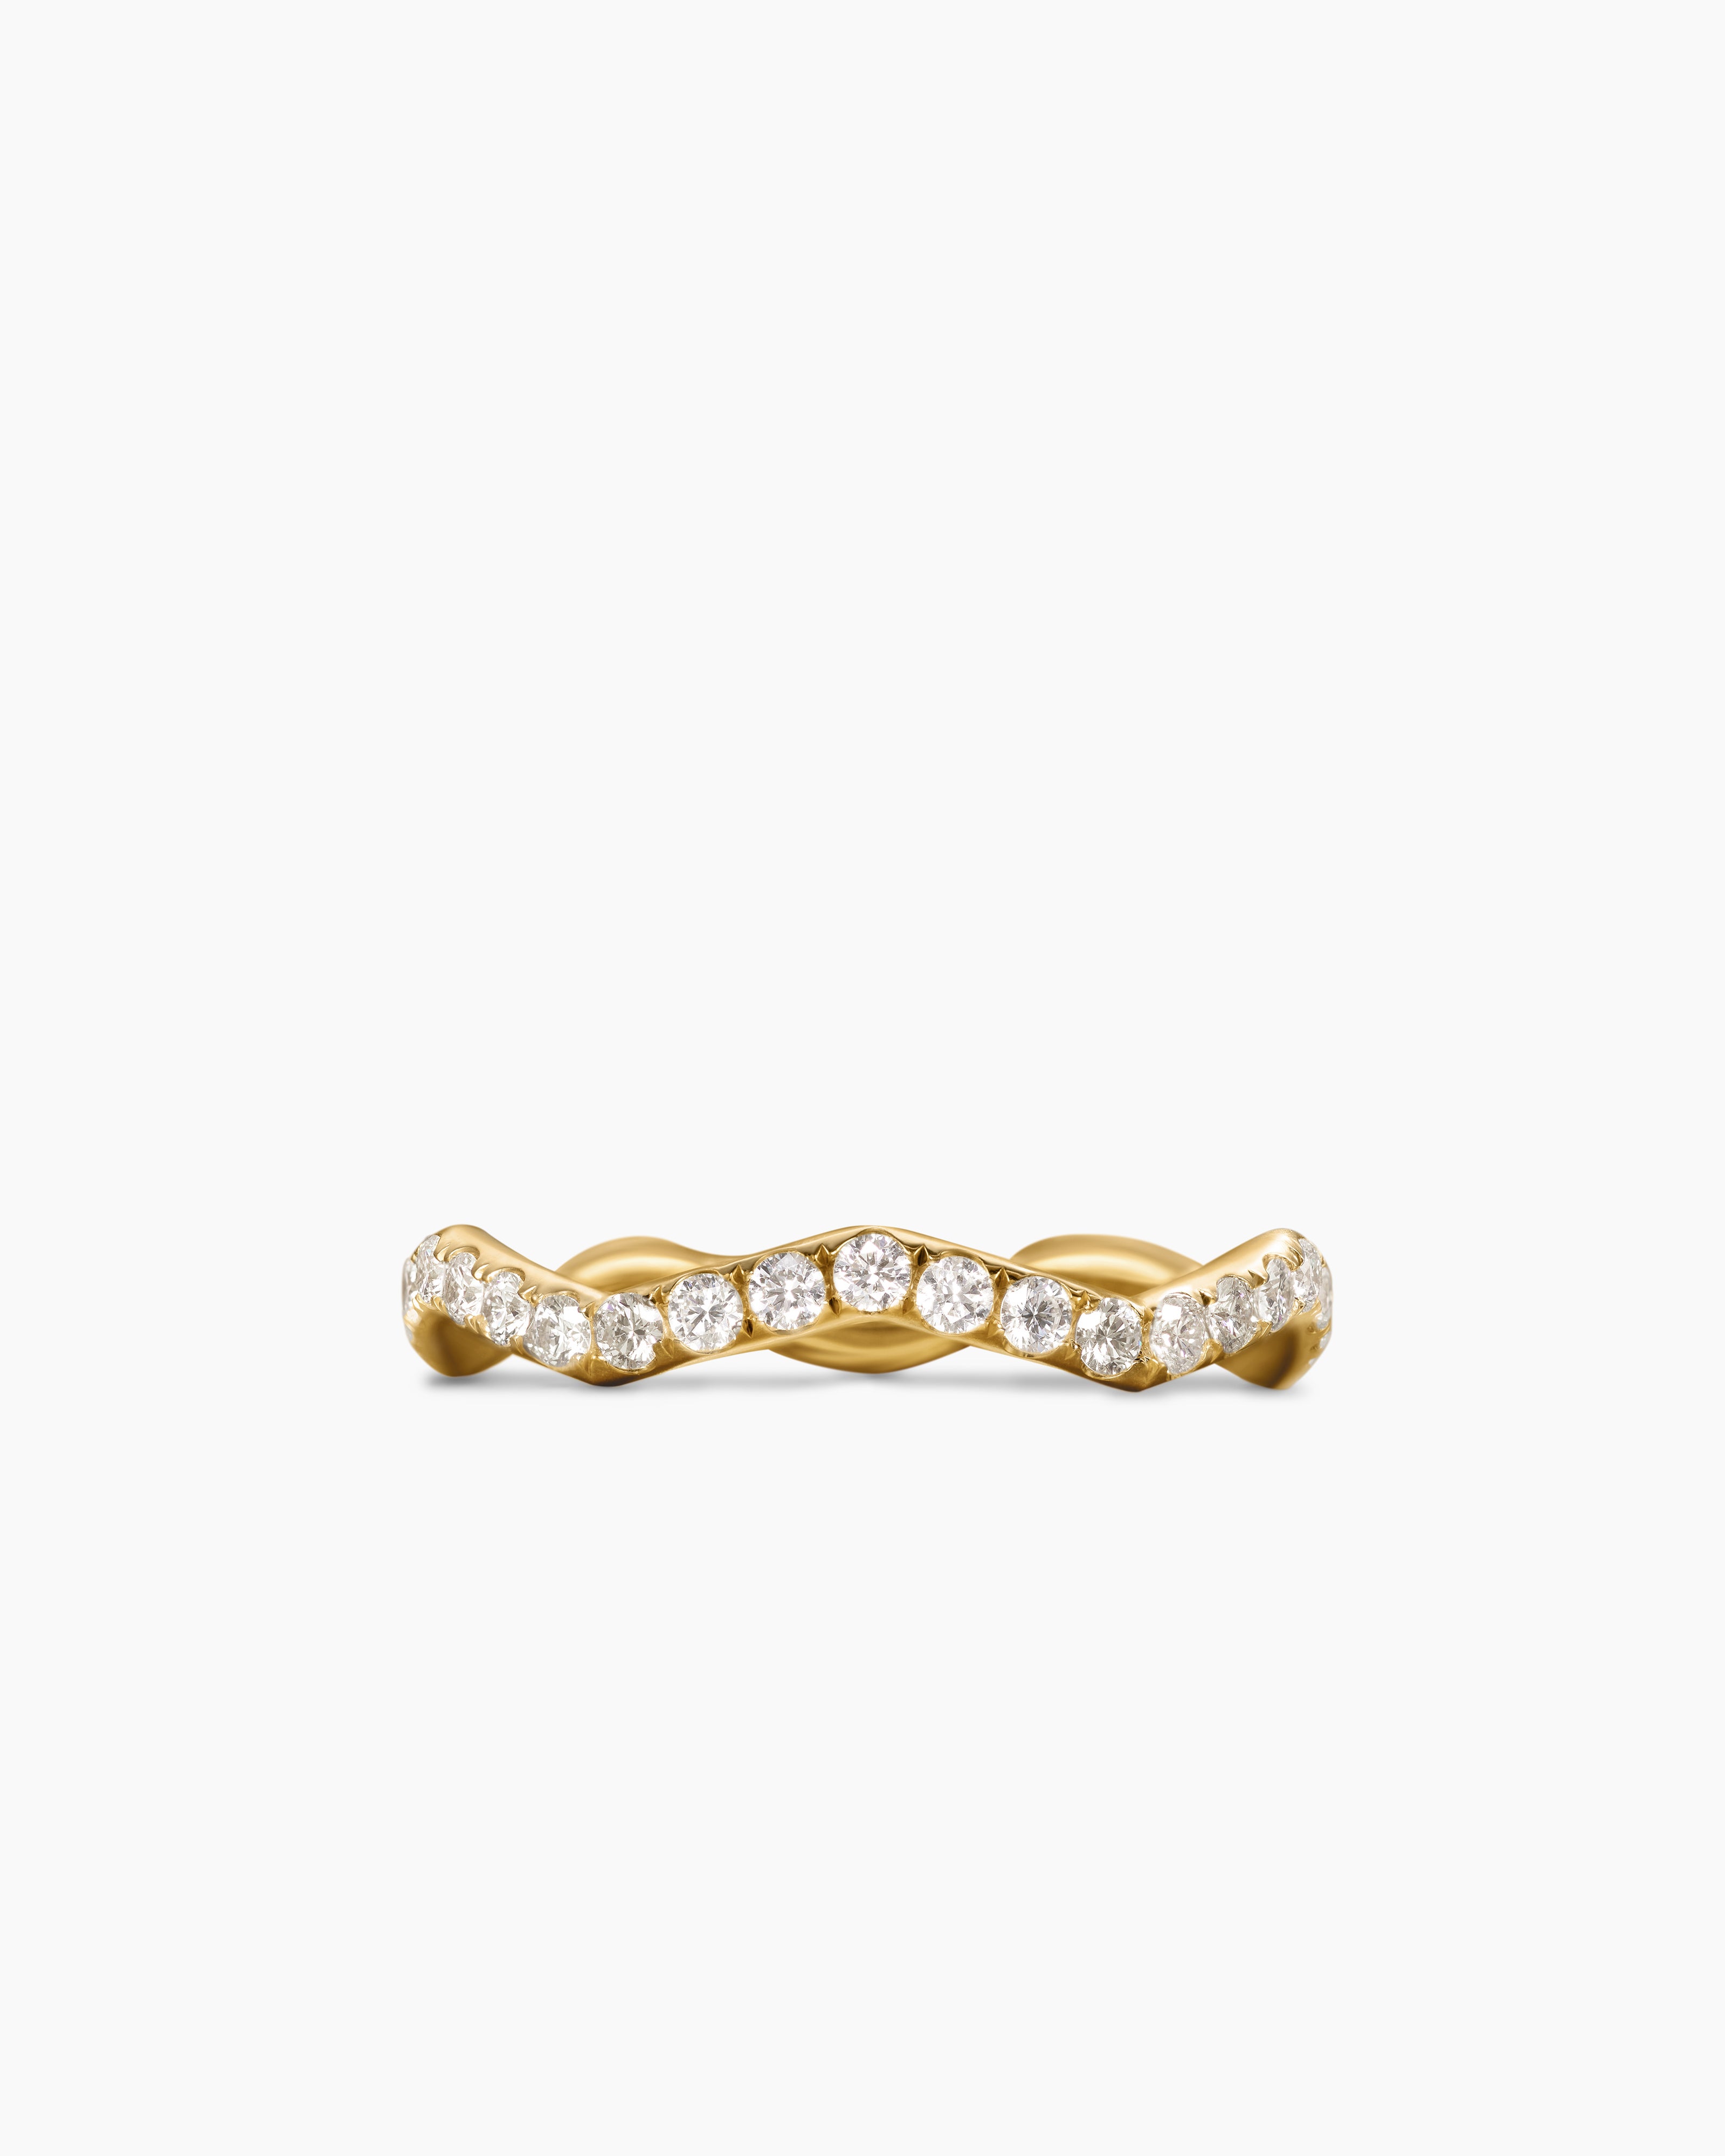 10KT Yellow Gold 1/10 cttw Diamond Heart Shape Ring (K-L, I1-I2) - Size 7 -  16G30A